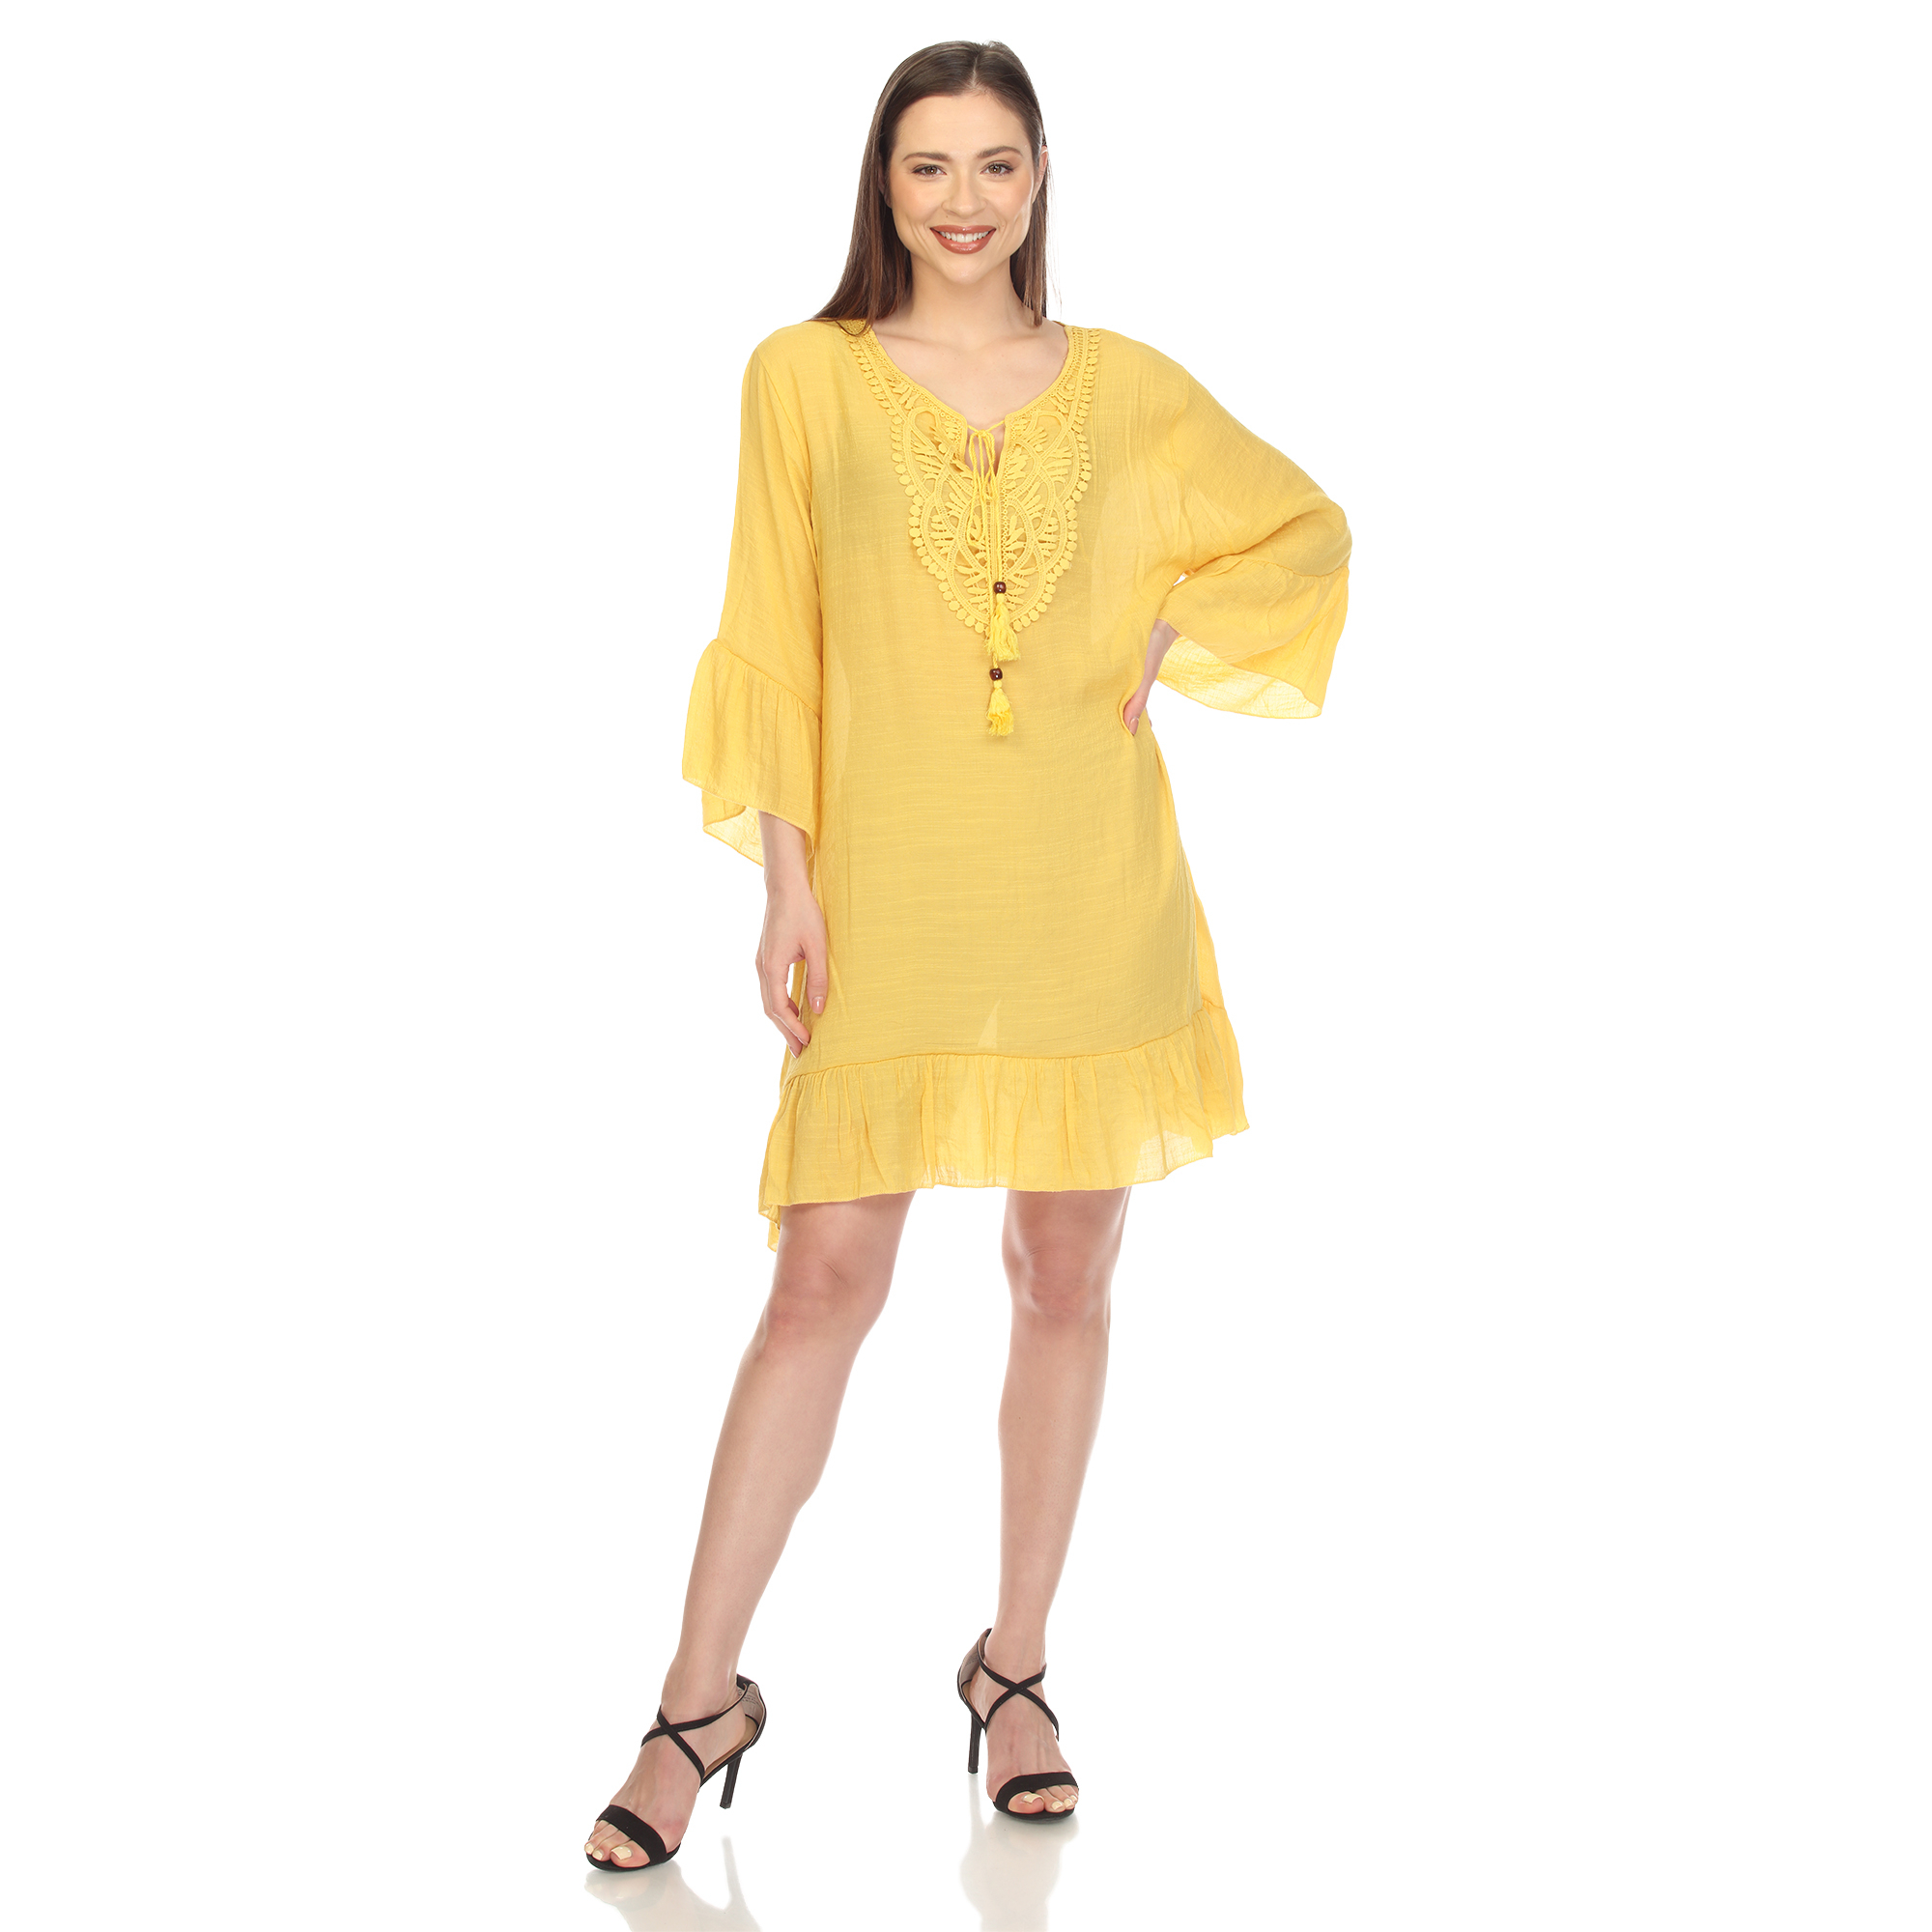 White Mark Women's Sheer Crochet Cover Up Dress - Yellow, One Size (Missy)